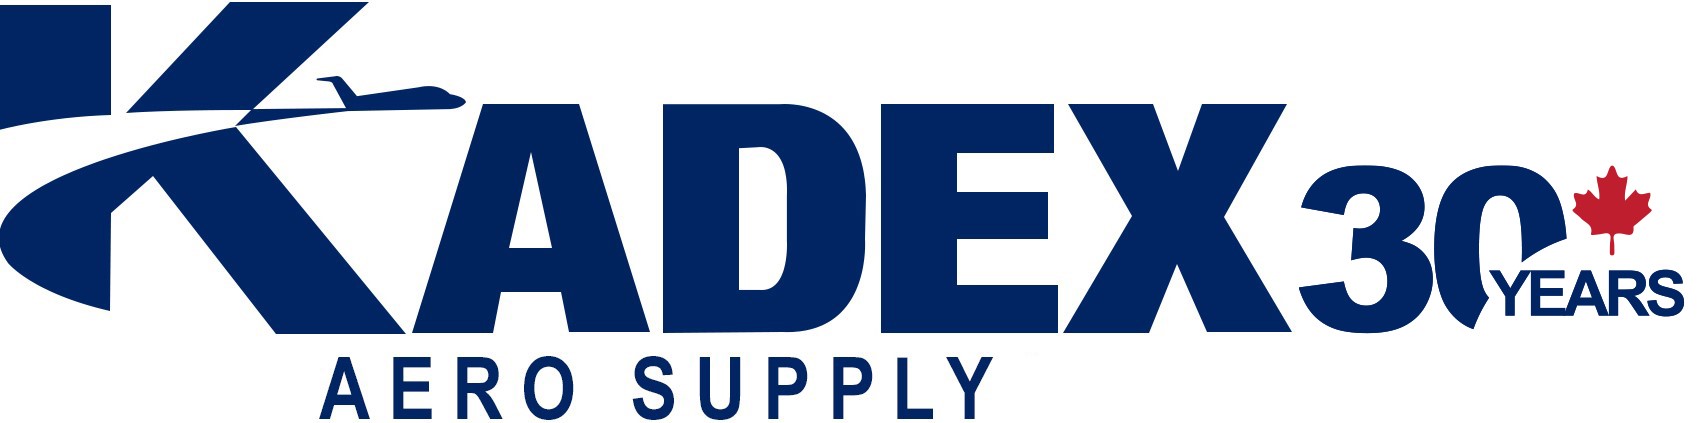 KADEX Aero Supply - Aircraft Parts & Service